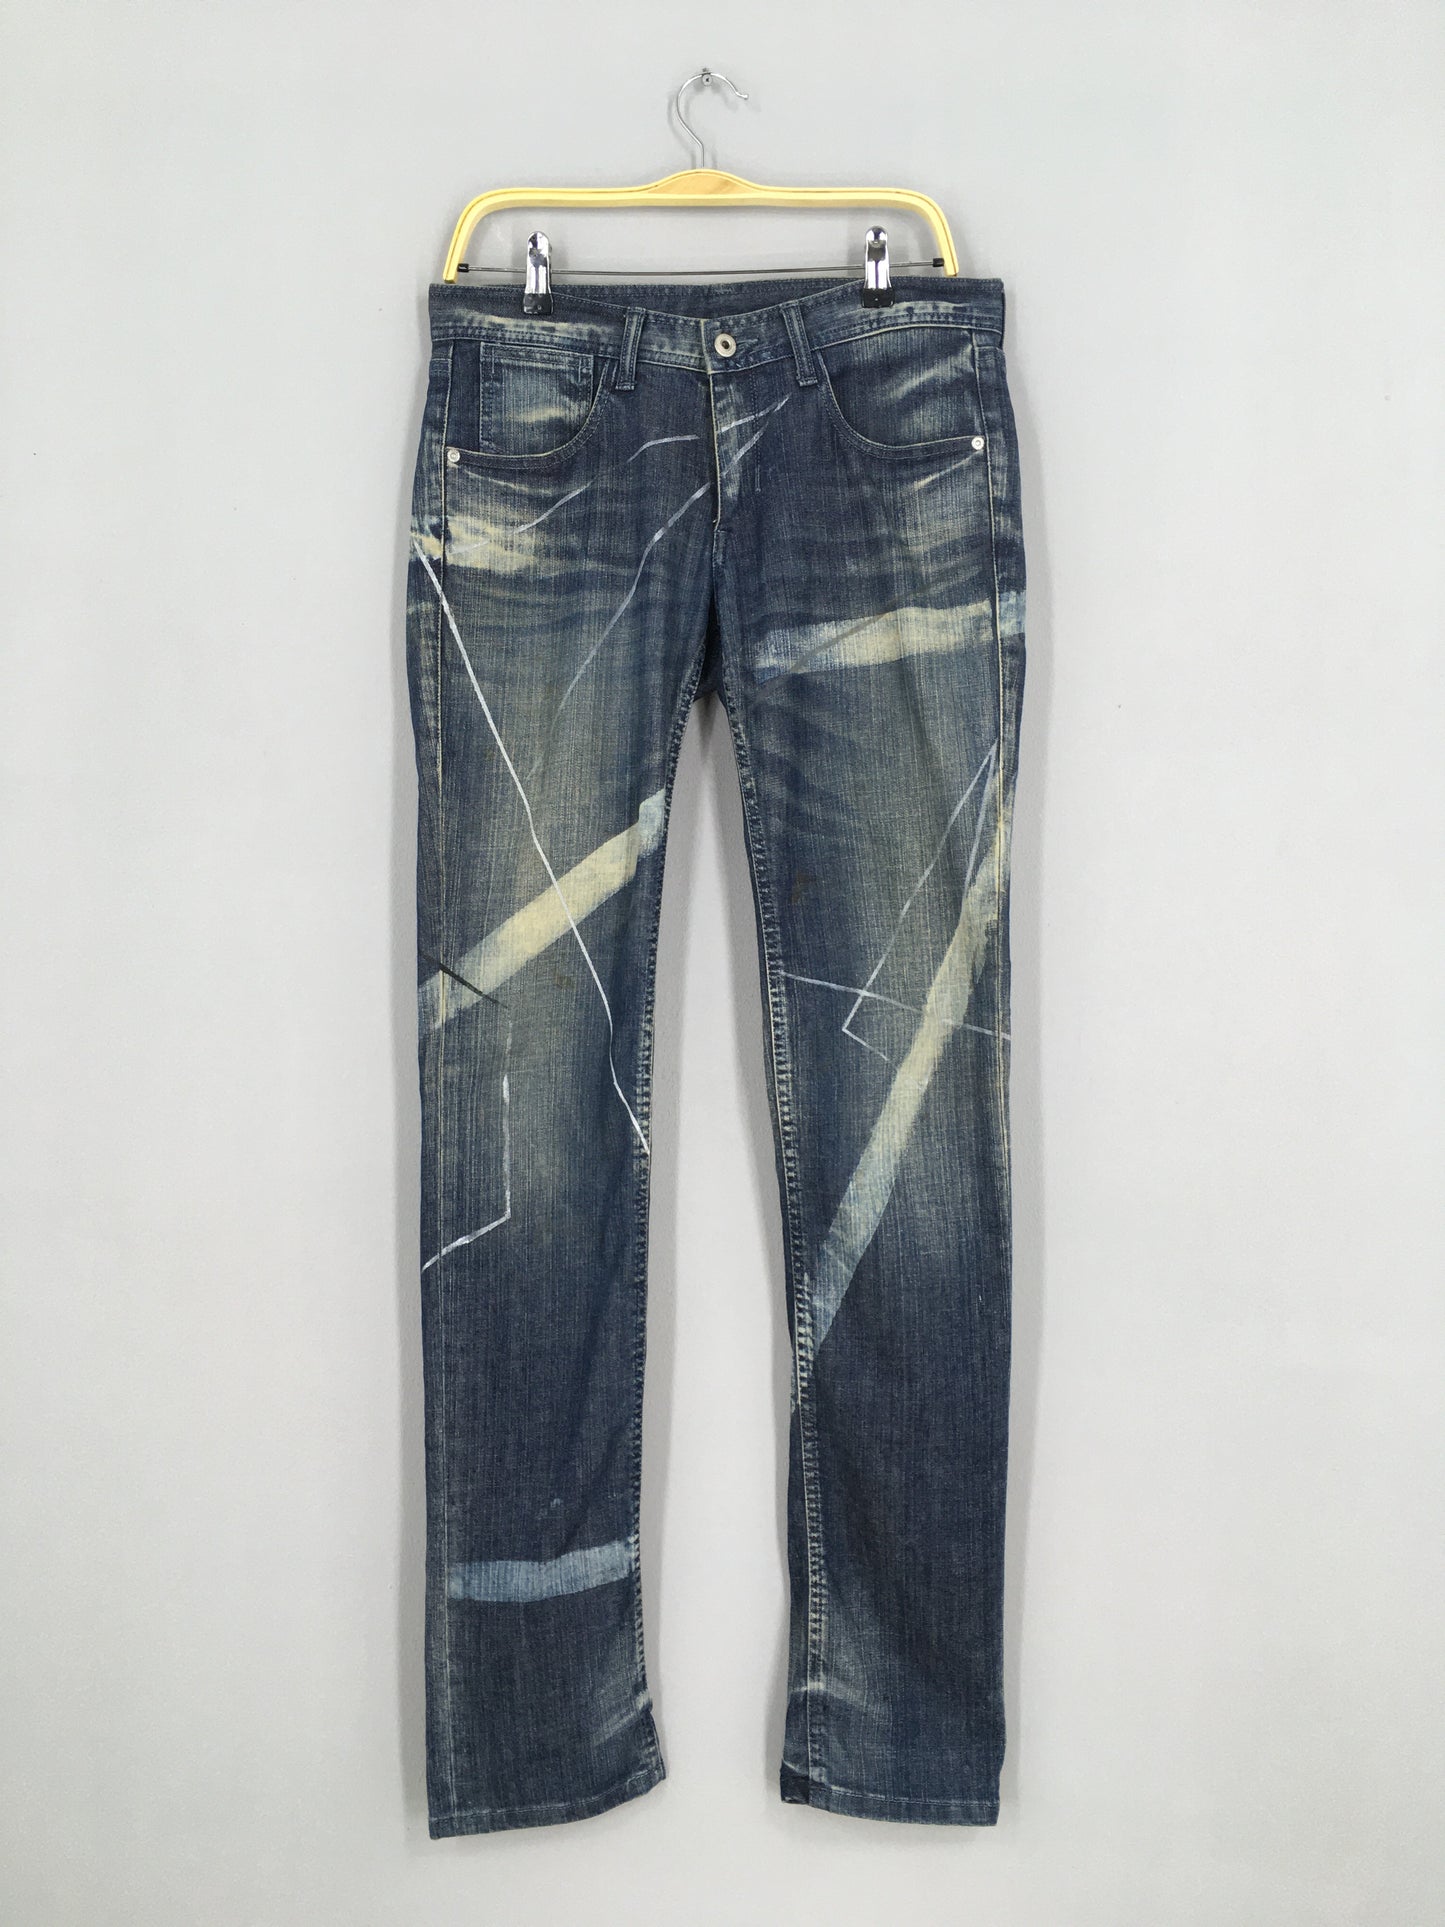 Size 32x34 Blackbarret By Neil Barret Slim Fit Patterned Paint Jeans